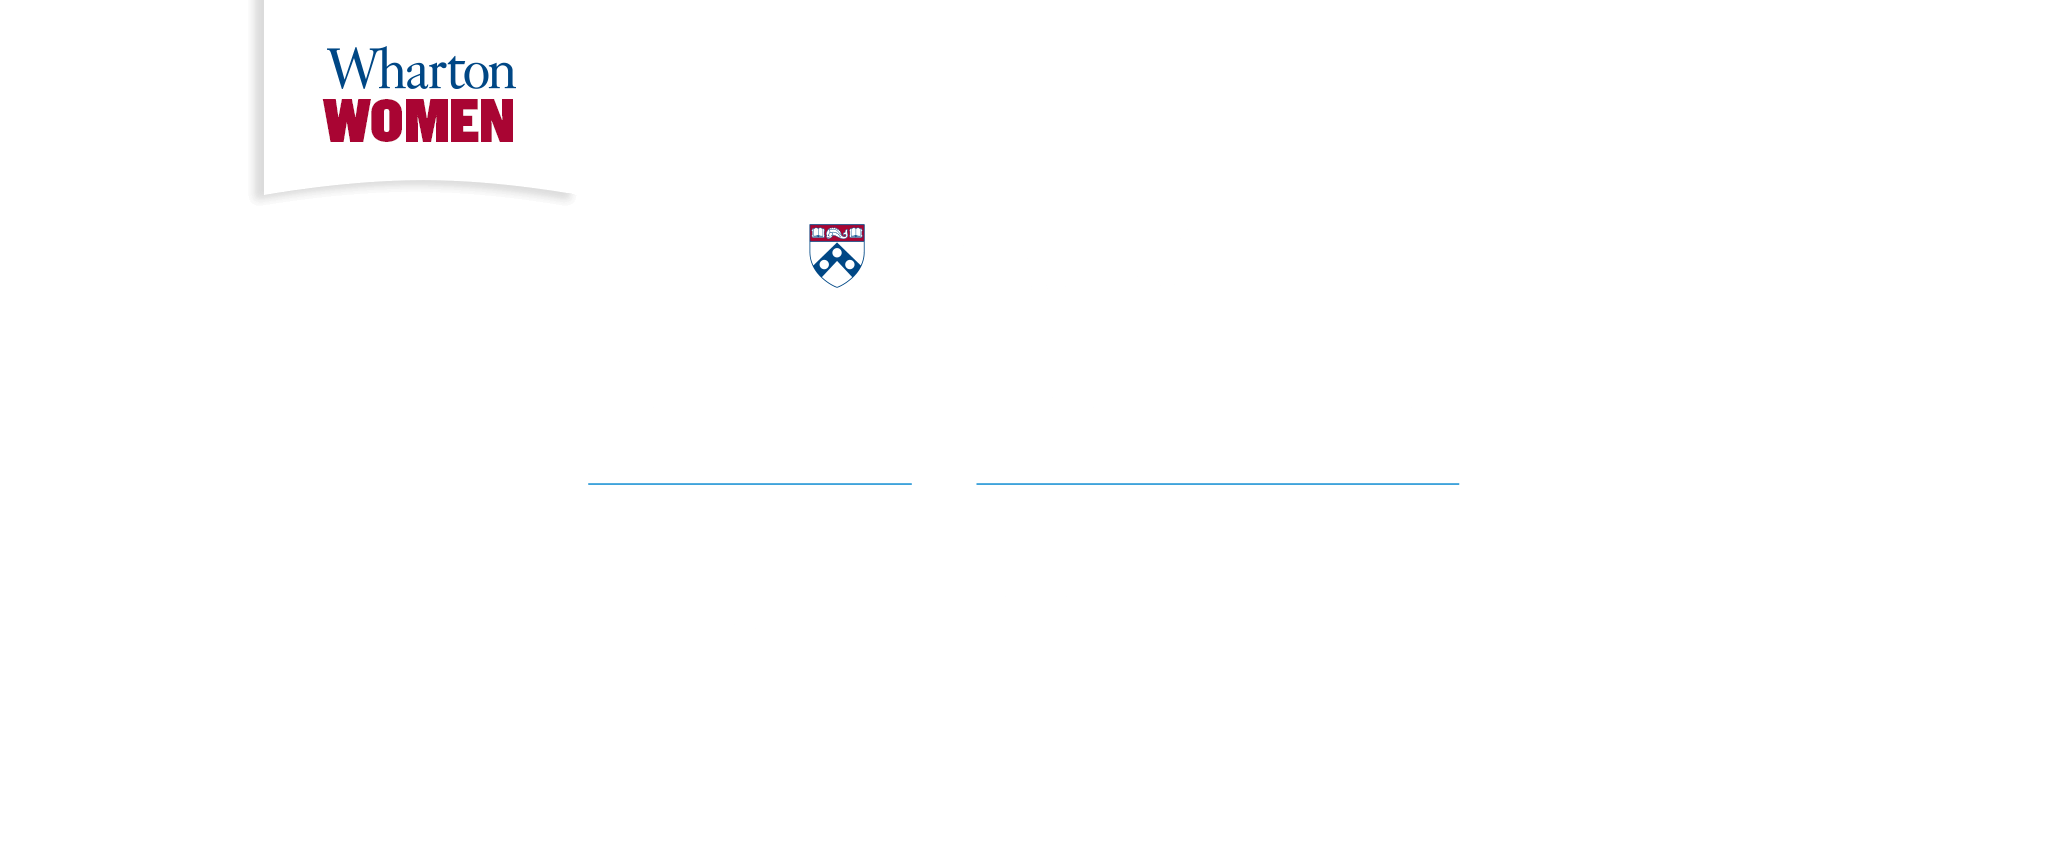 Wharton Women Defining the Future of Wharton